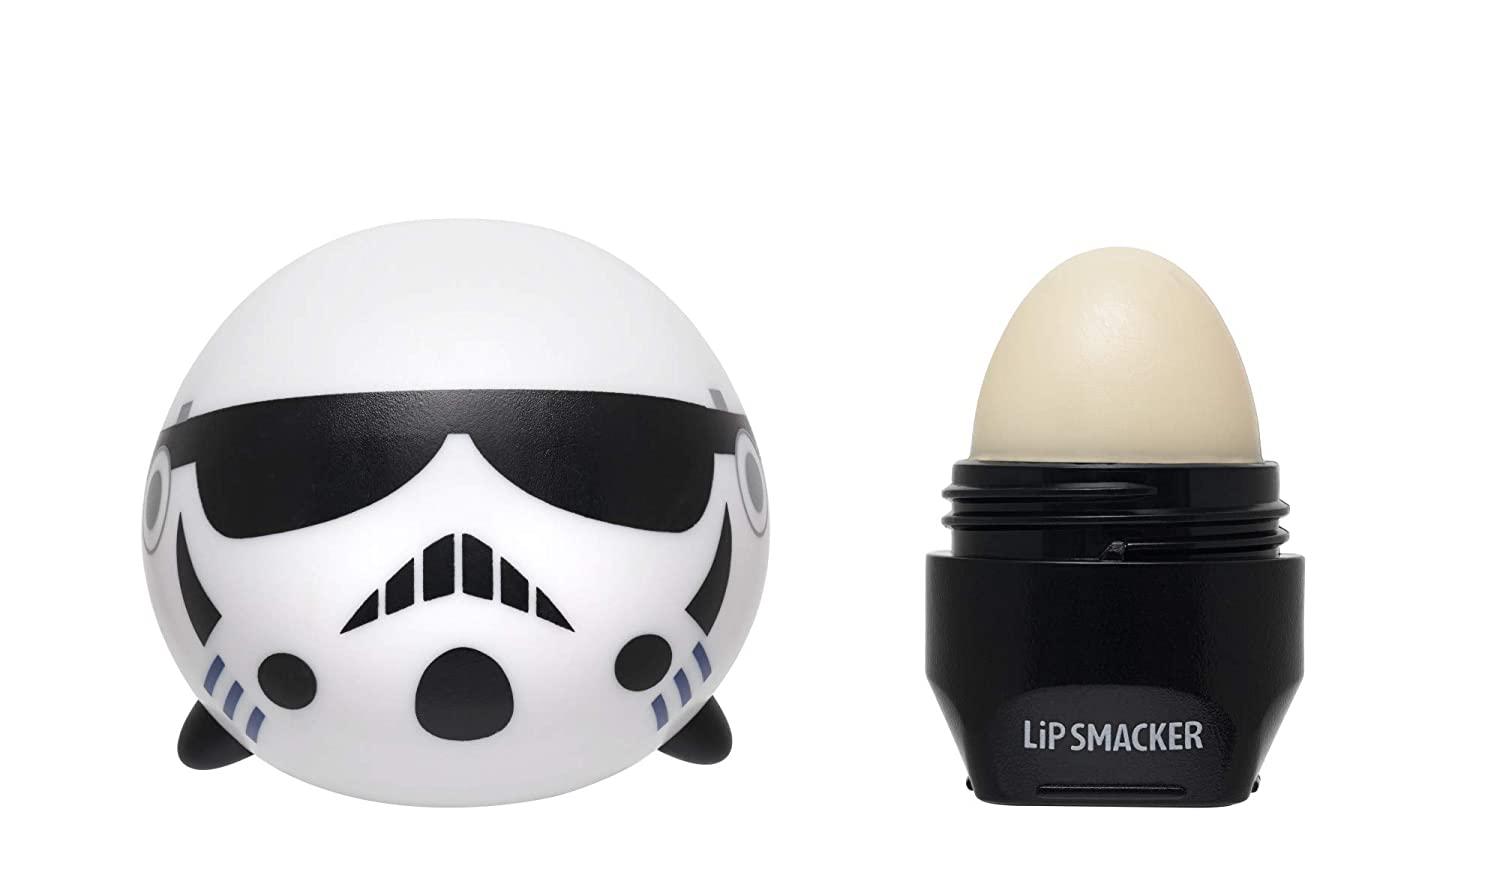 Lip Smacker Star Wars Tsum Tsum Lip Balm Stormtrooper Ice Cream Clone 0.26  oz (7.4 g)